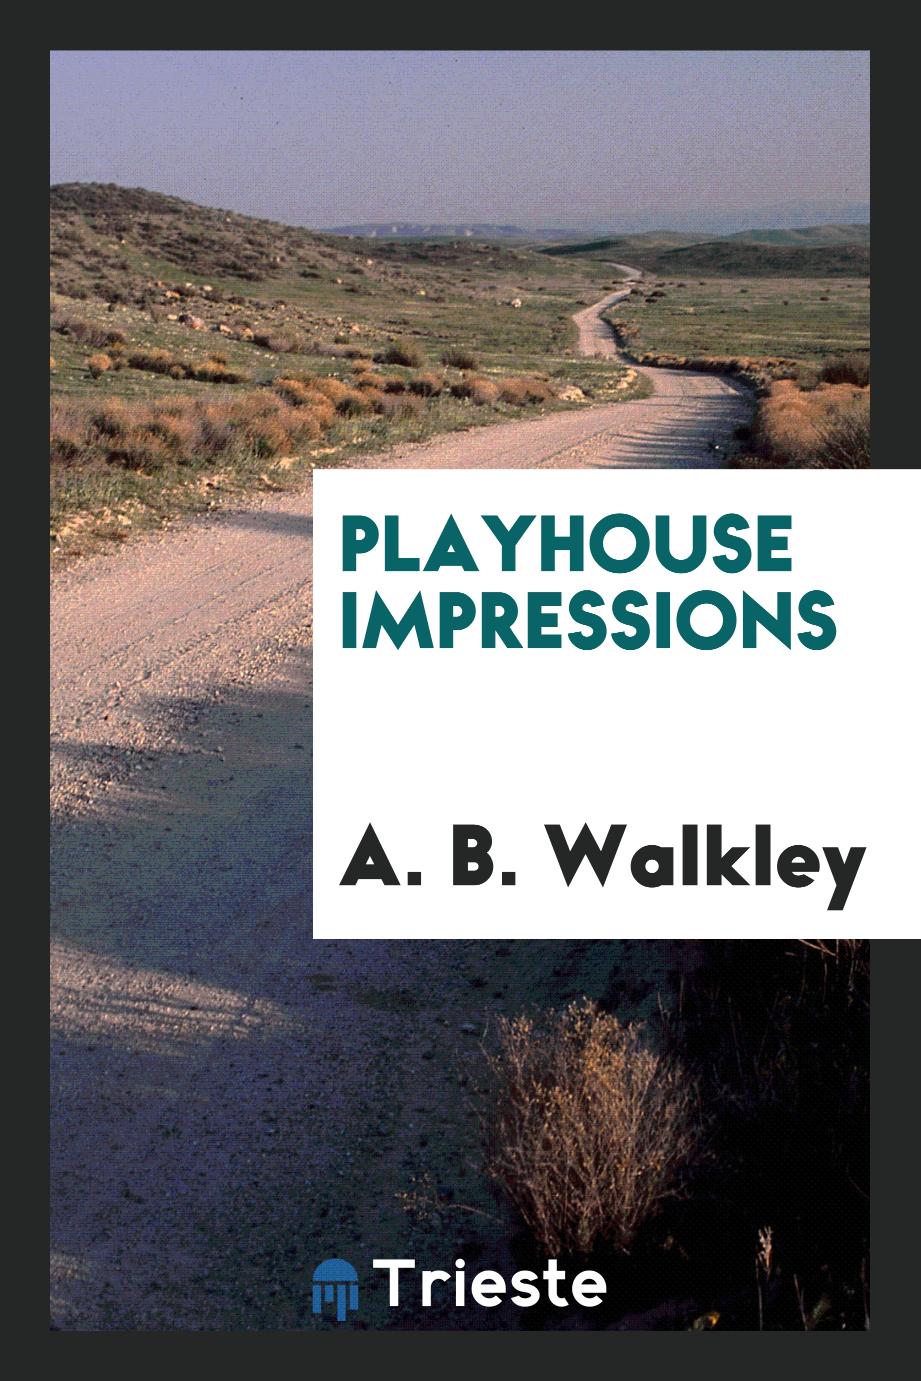 Playhouse impressions